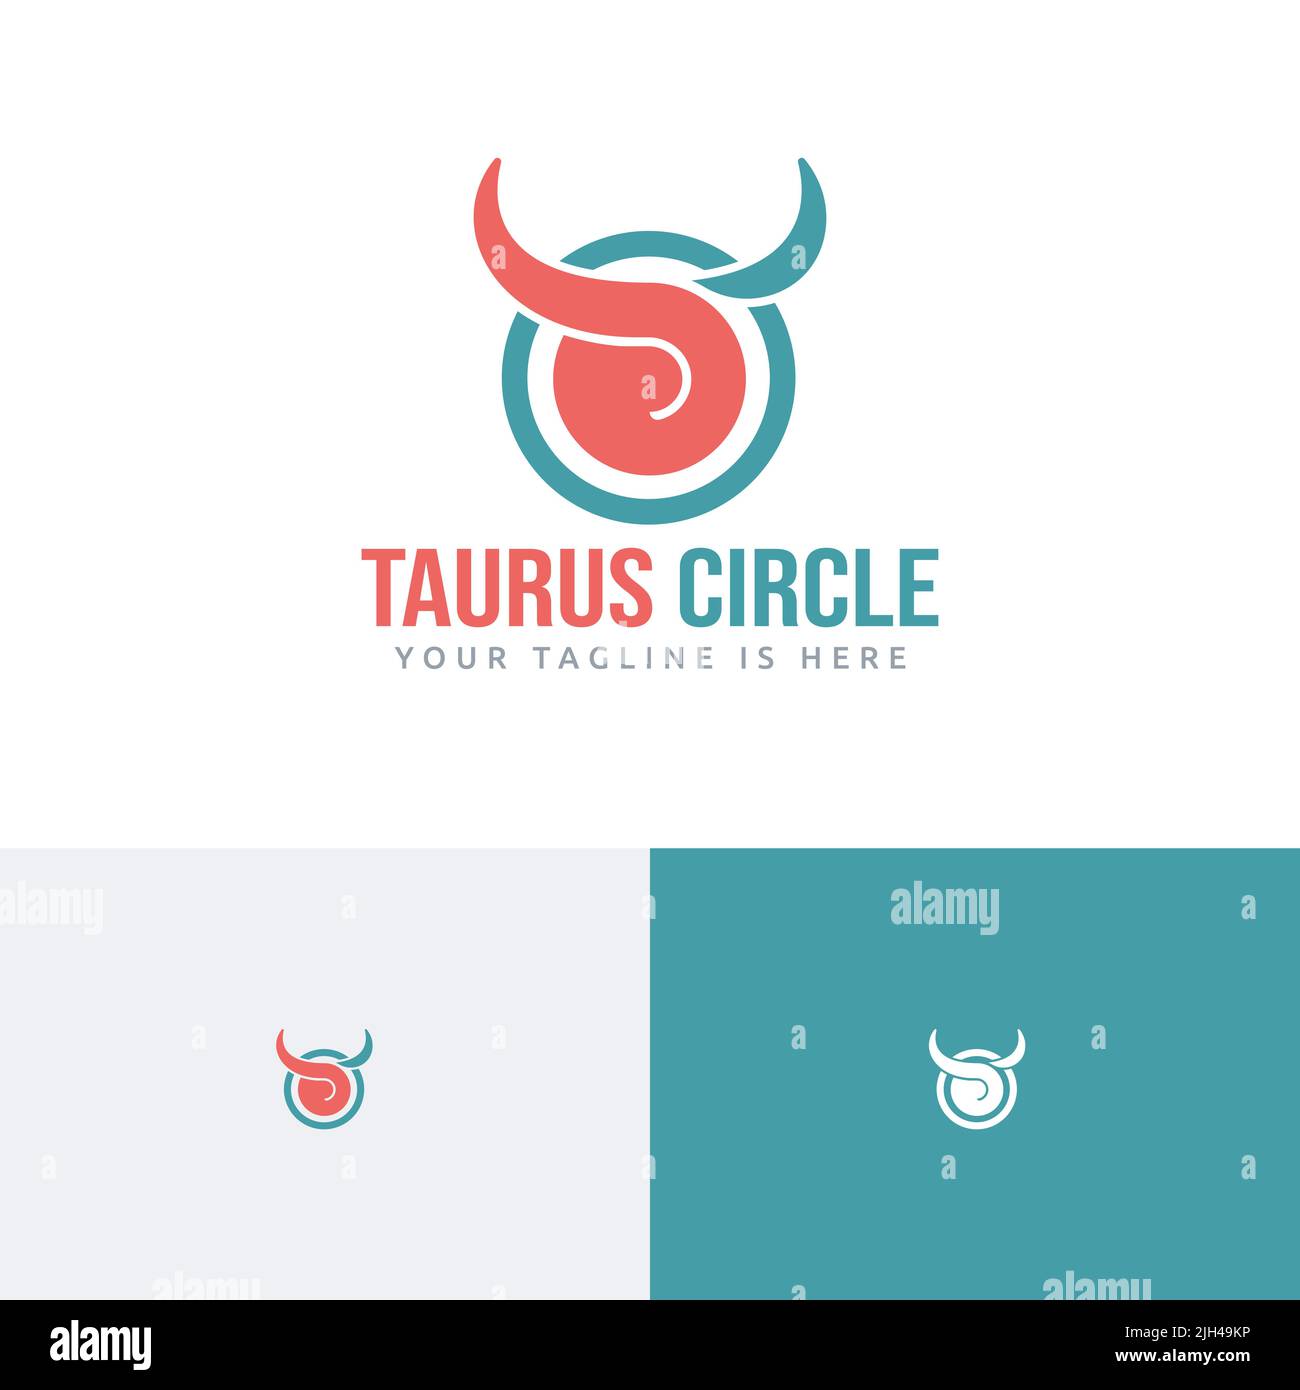 Taurus Myth Bull Eye symbole cercle abstrait logo Illustration de Vecteur